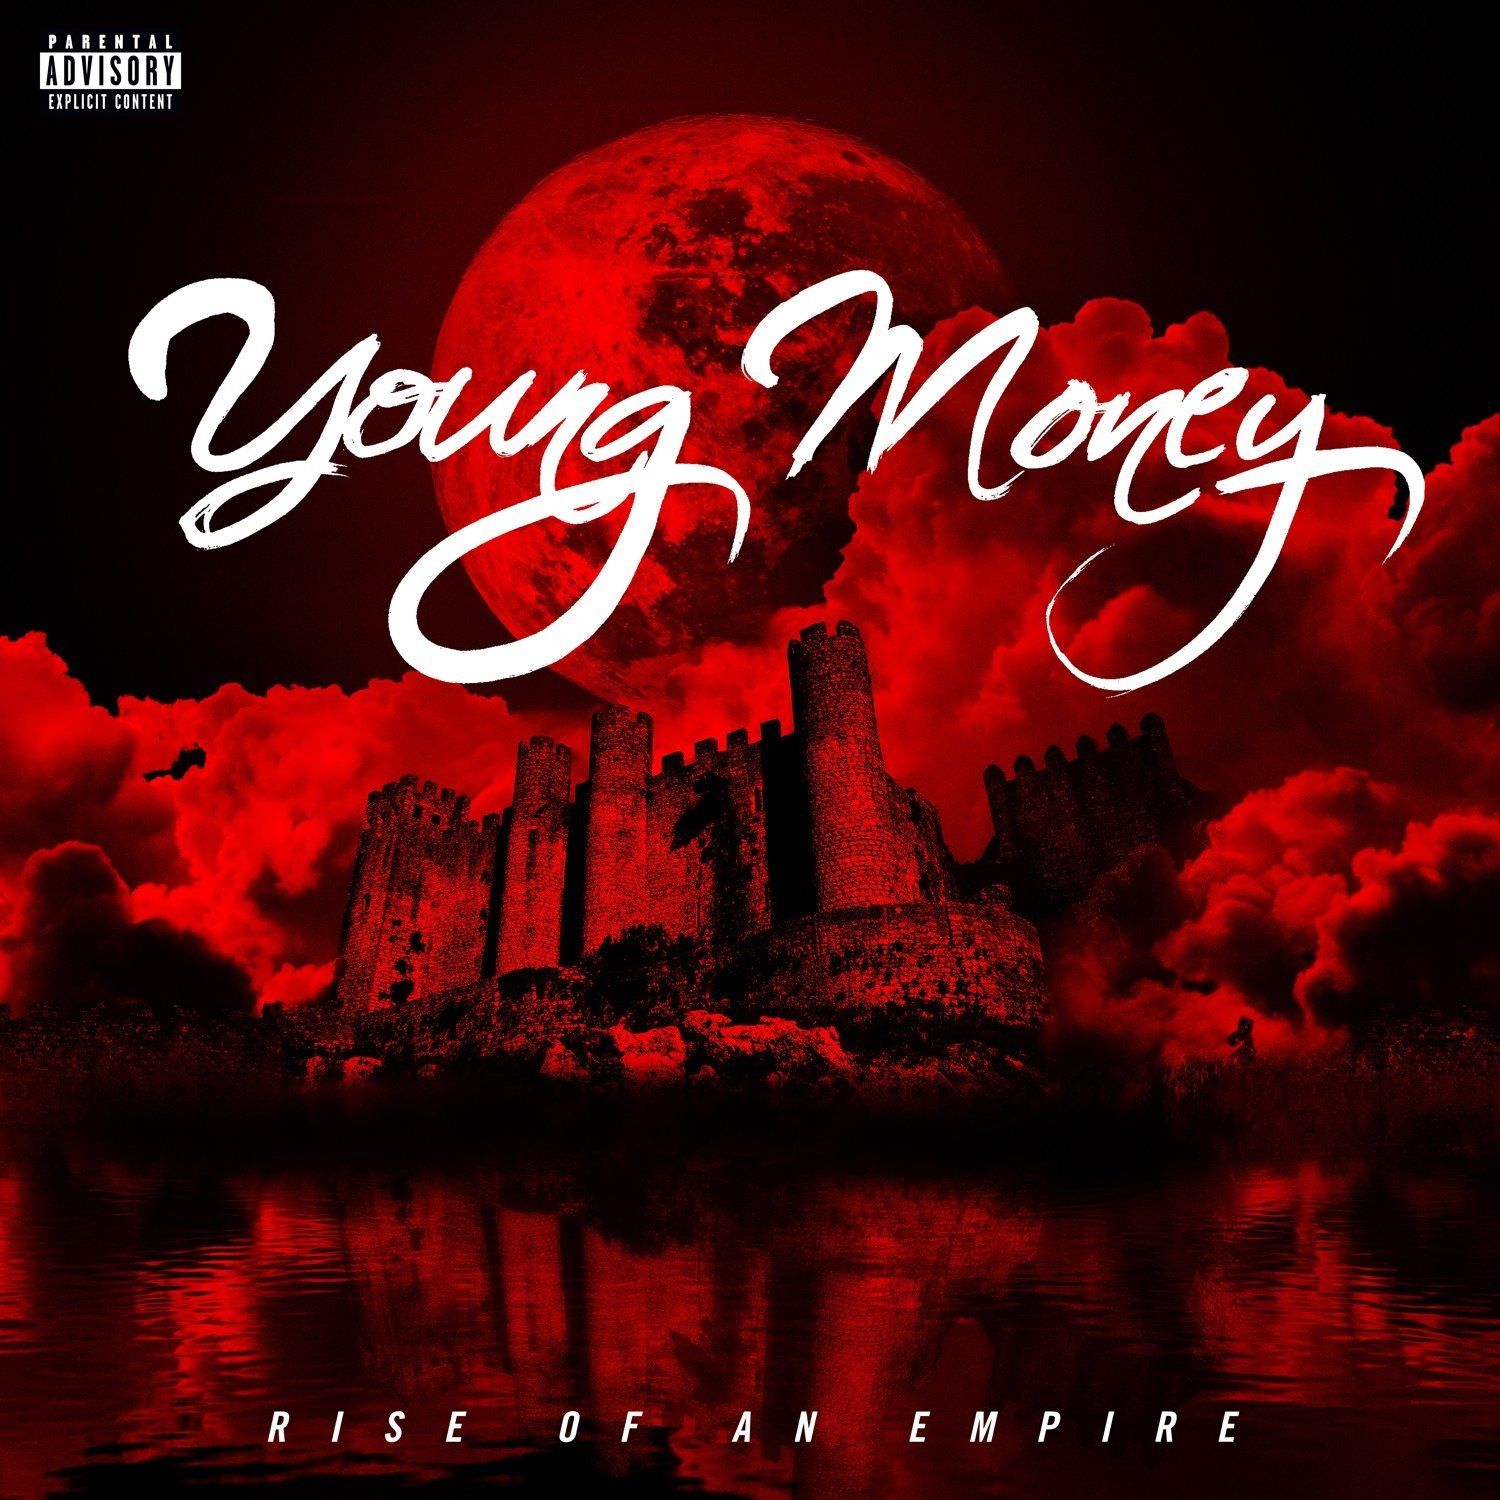 Imagem do álbum Young Money: Rise of an Empire do(a) artista Lil Twist